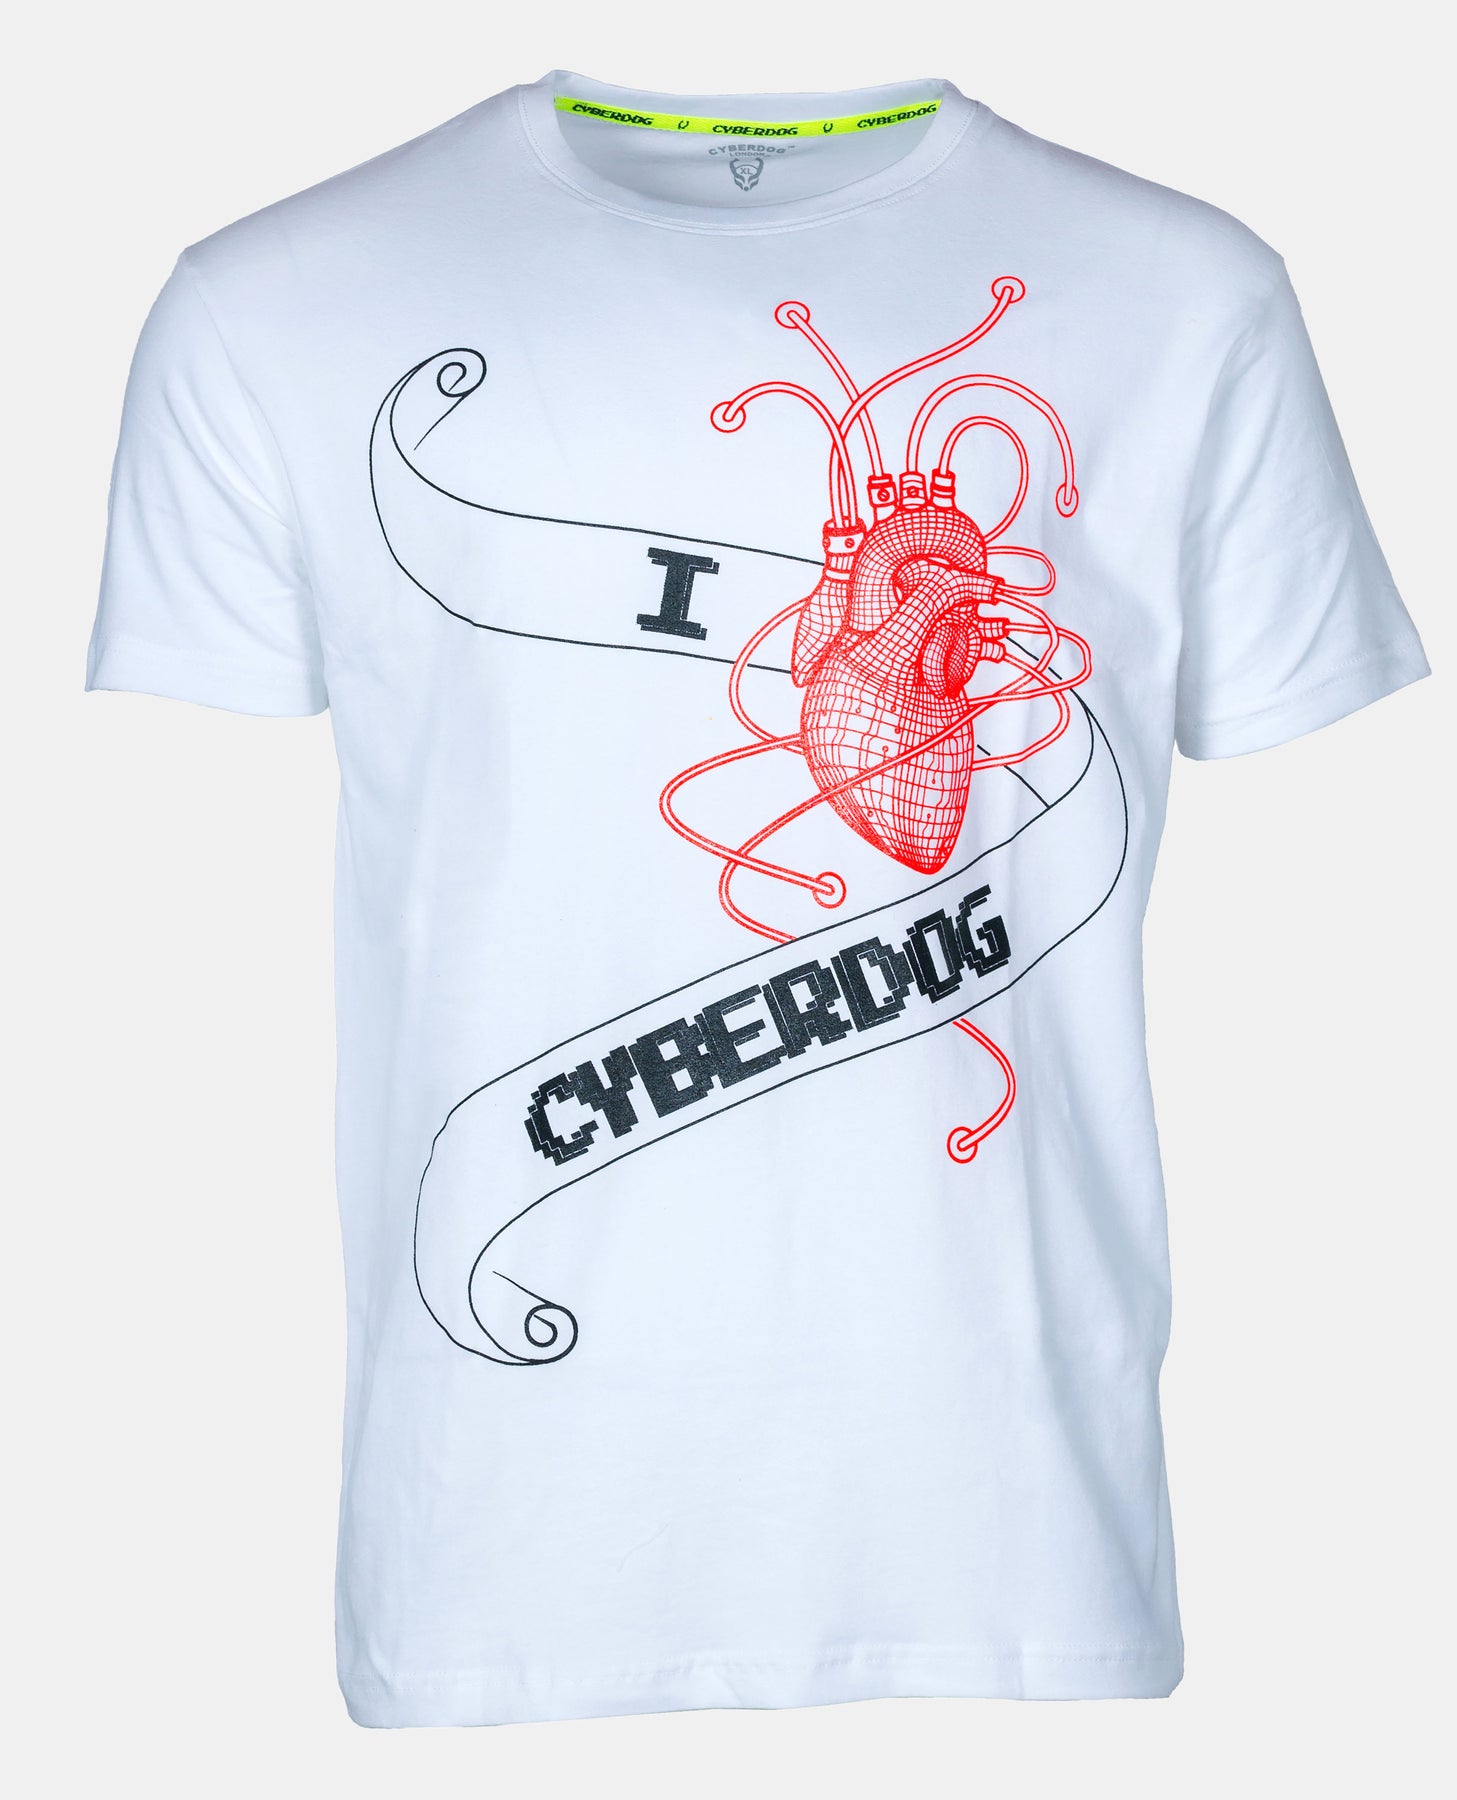 MENS I HEART CYBERDOG T-SHIRT | Cyberdog London by Cyberdog - Rave ...